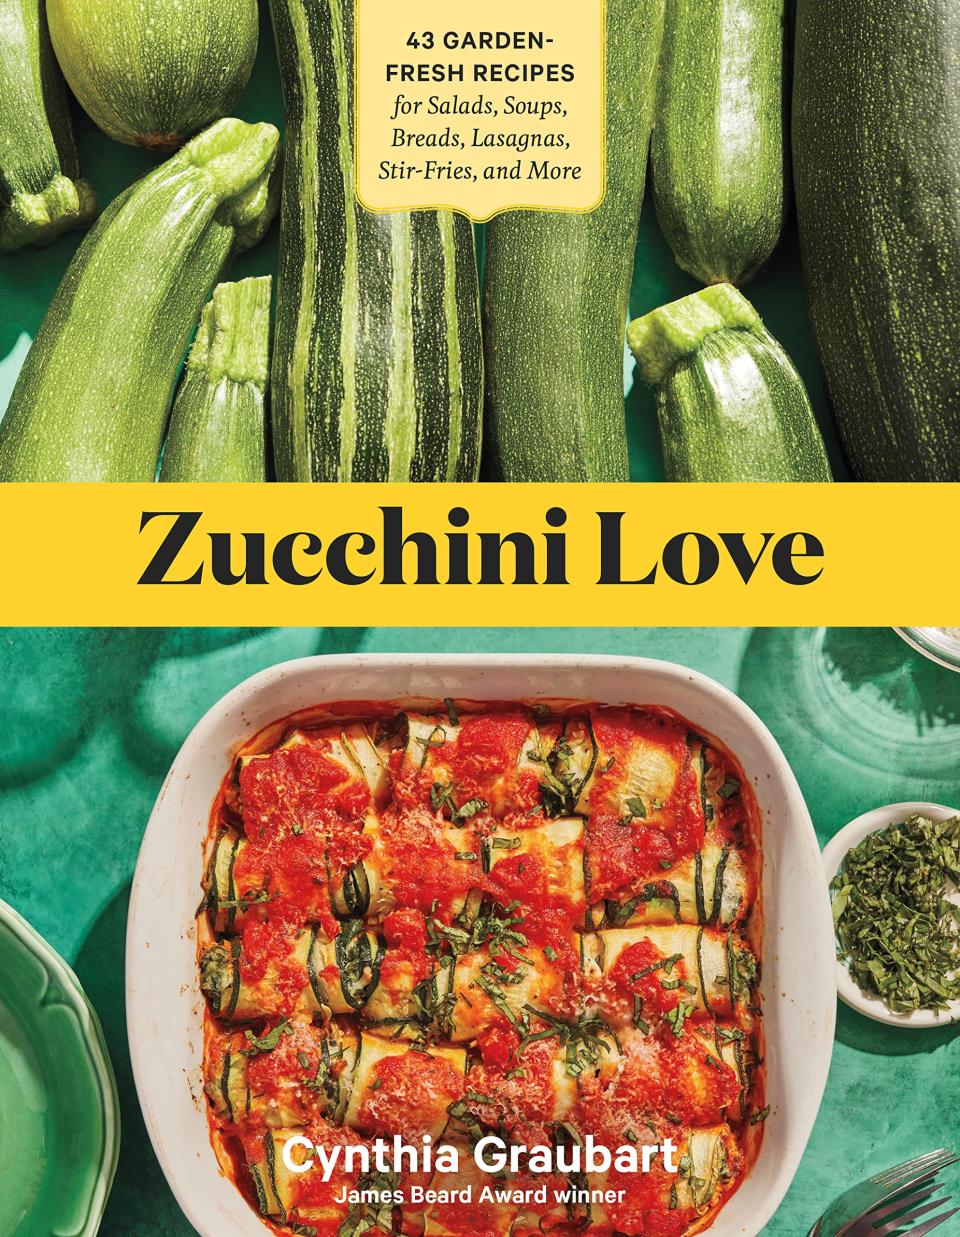 James Beard Foundation Award-winning cookbook author Cynthia Graubart's latest release, "Zucchini Love."